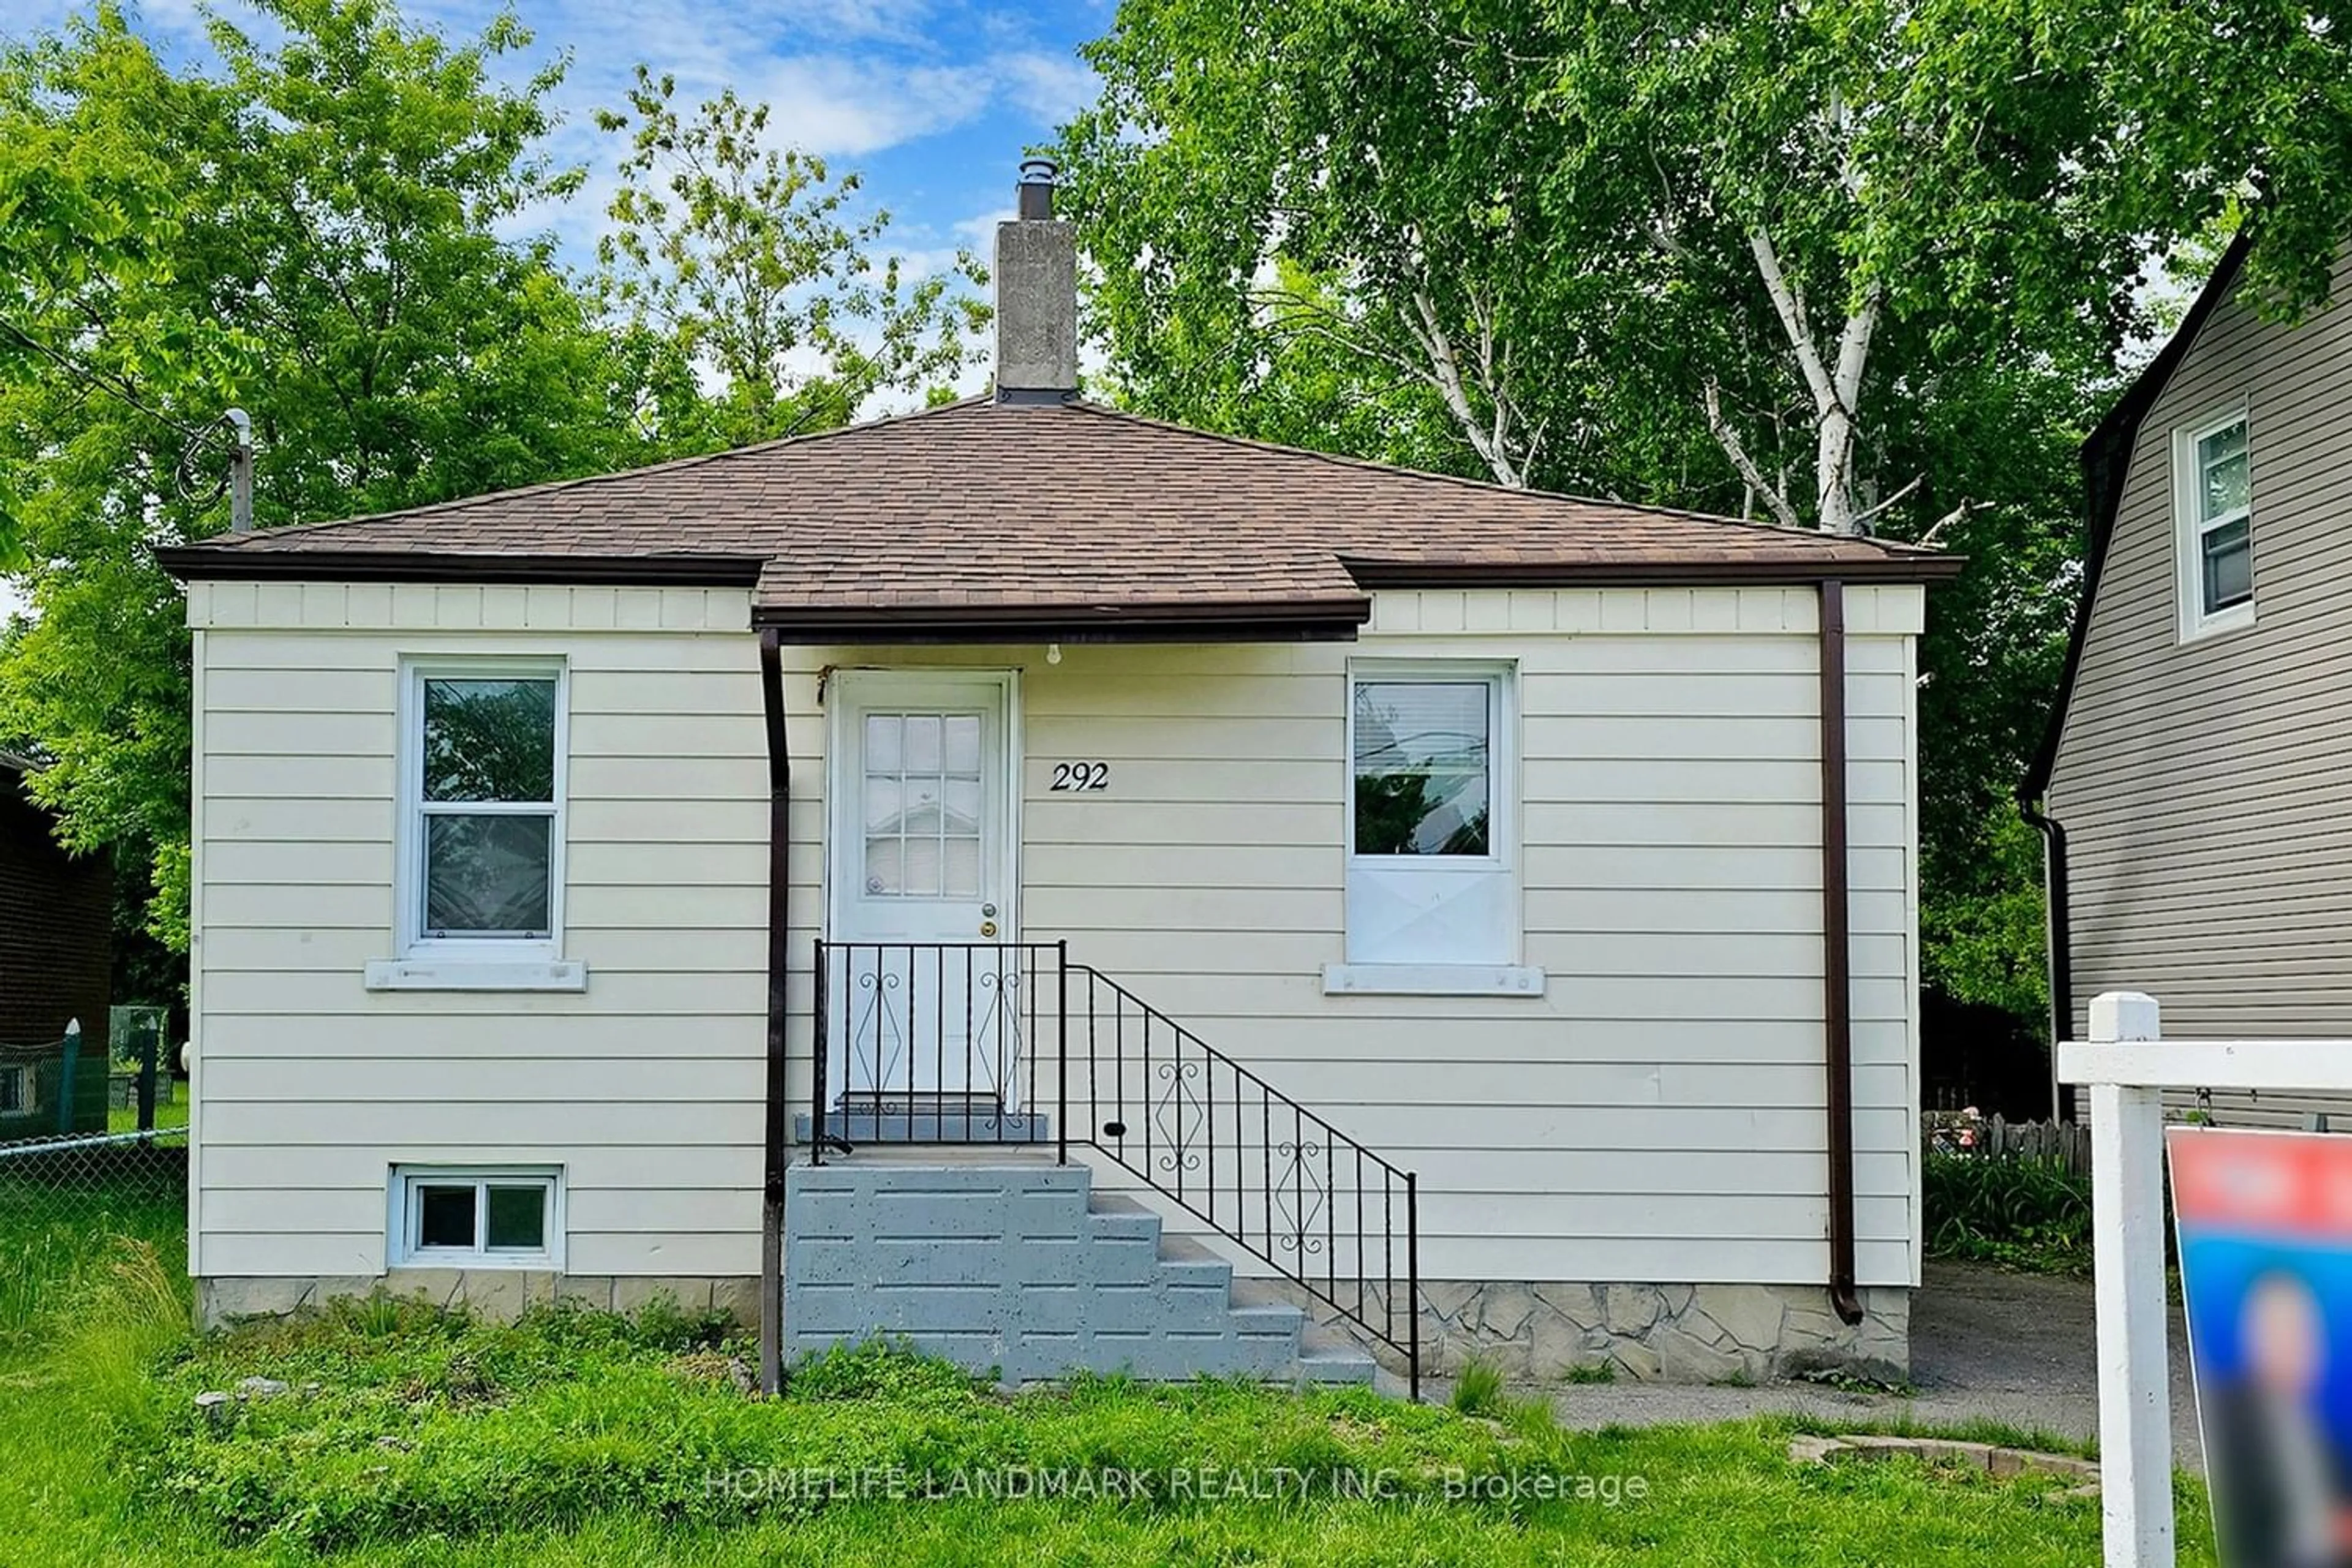 Cottage for 292 Elgin St, Oshawa Ontario L1J 2P3